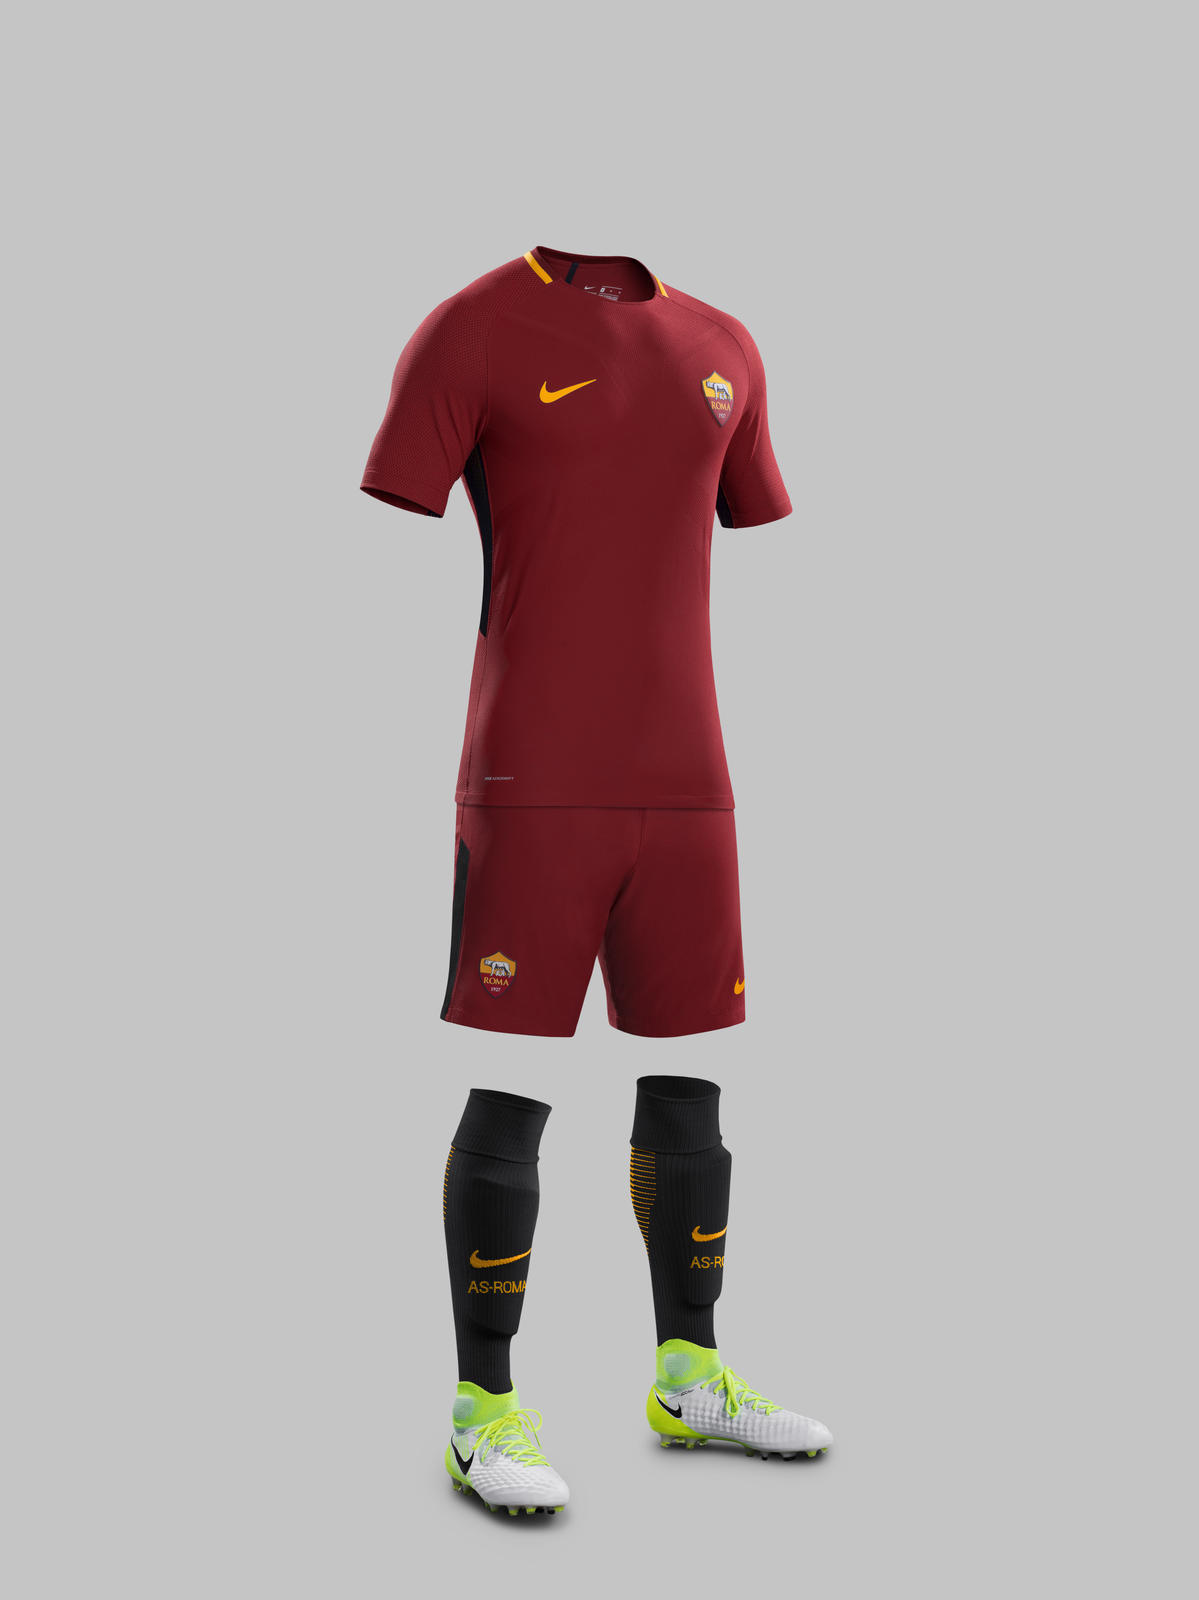 soldadura poco claro Experto Nike launch AS Roma 2017-18 home kit!